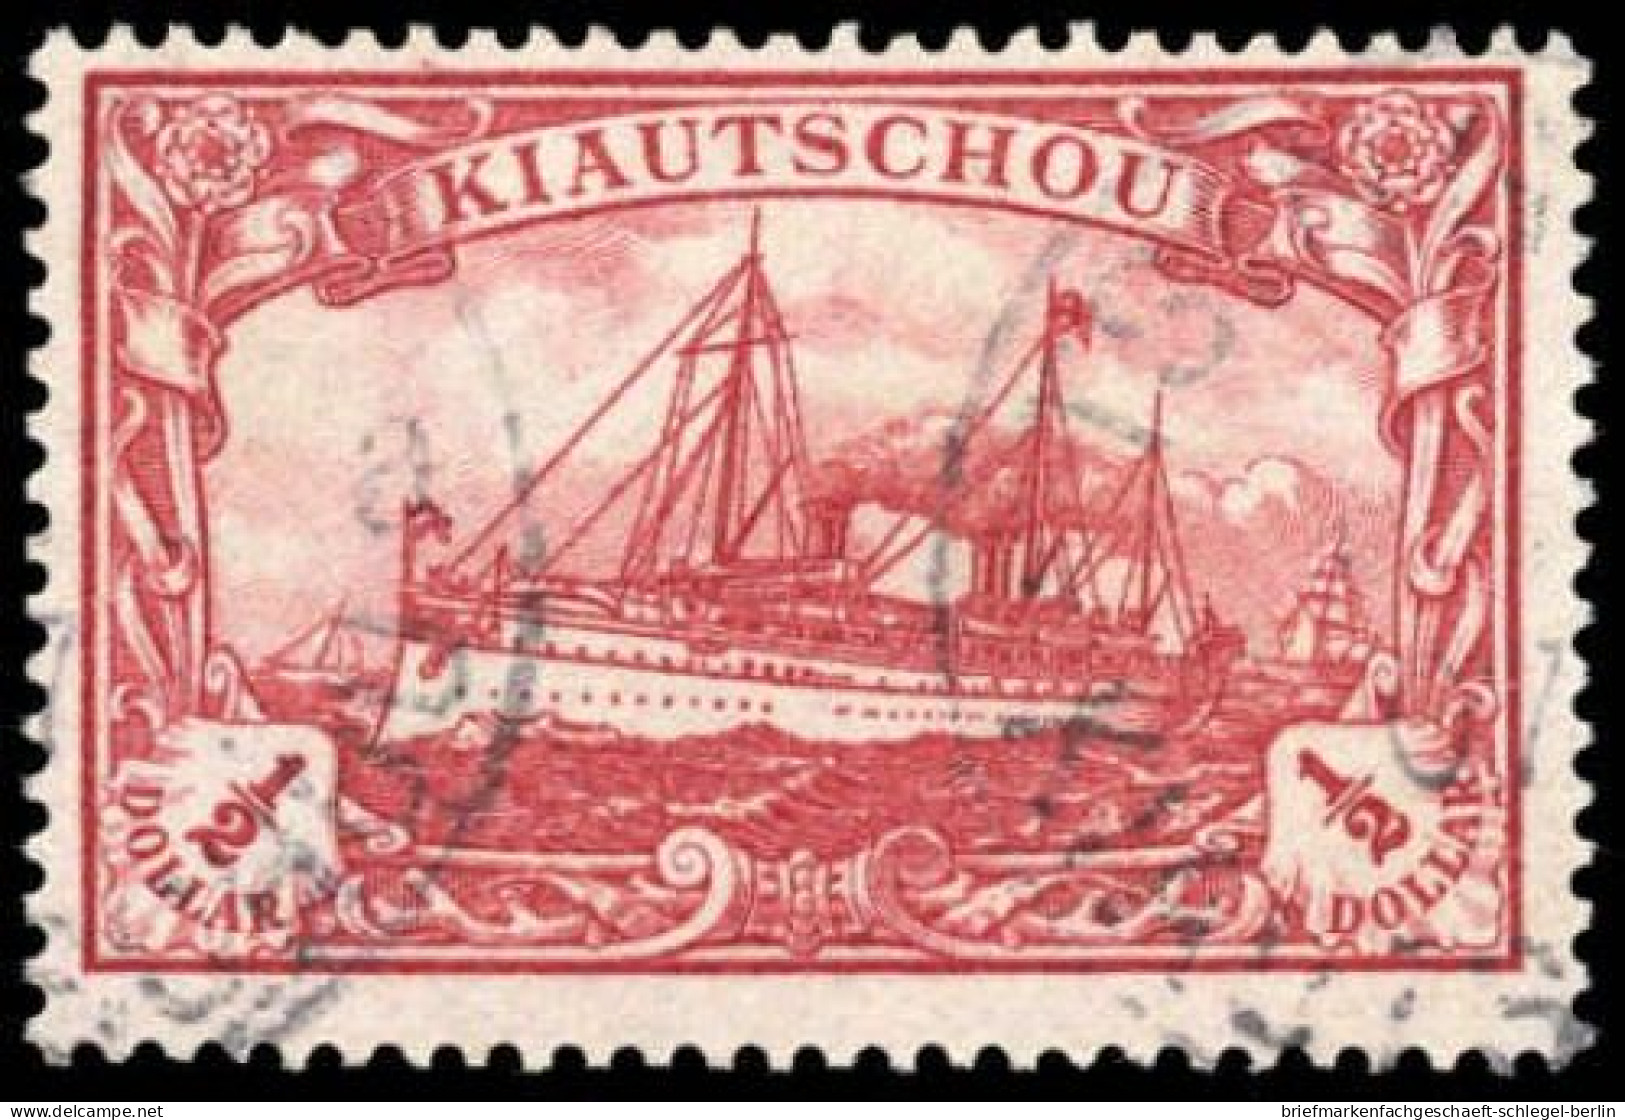 Deutsche Kolonien Kiautschou, 1905, 24 B, Gestempelt - Kiautschou